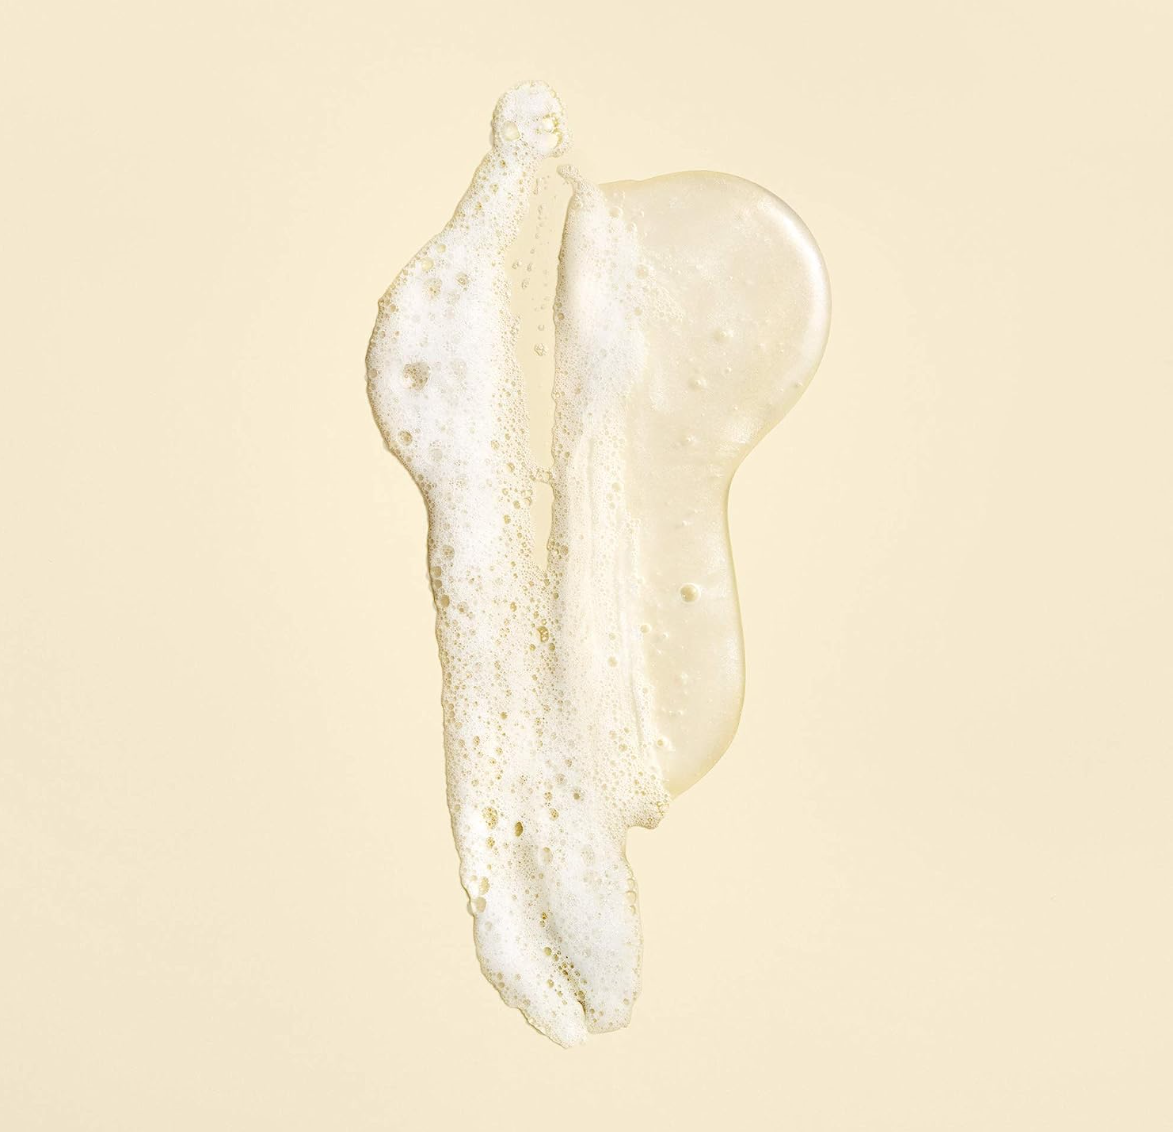 Oribe Gold Lust Repair & Restore Shampoo 8.5 Ounce